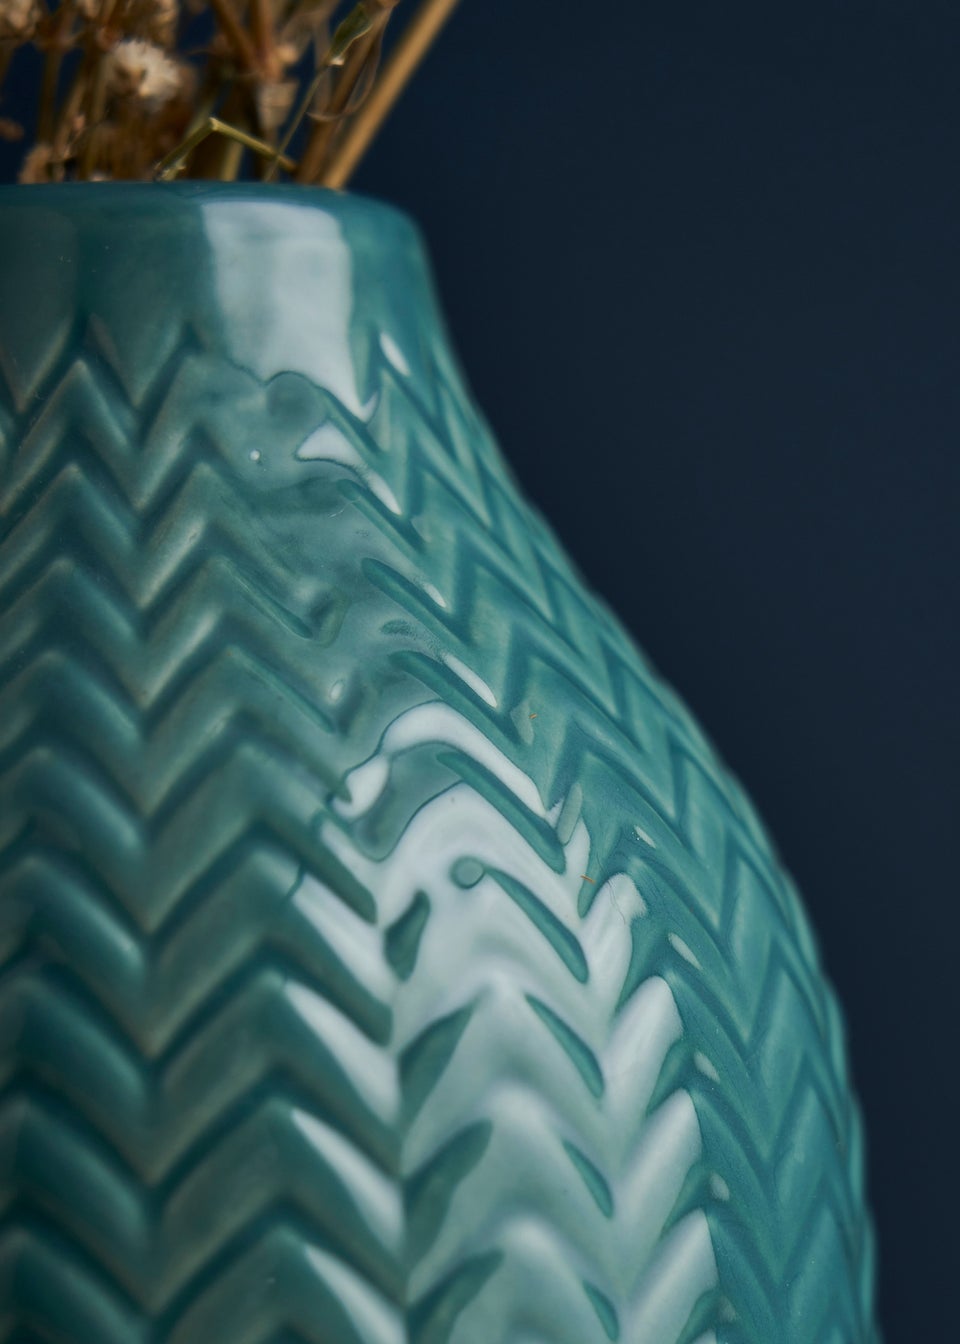 BHS Chevron Ceramic Vase  Green